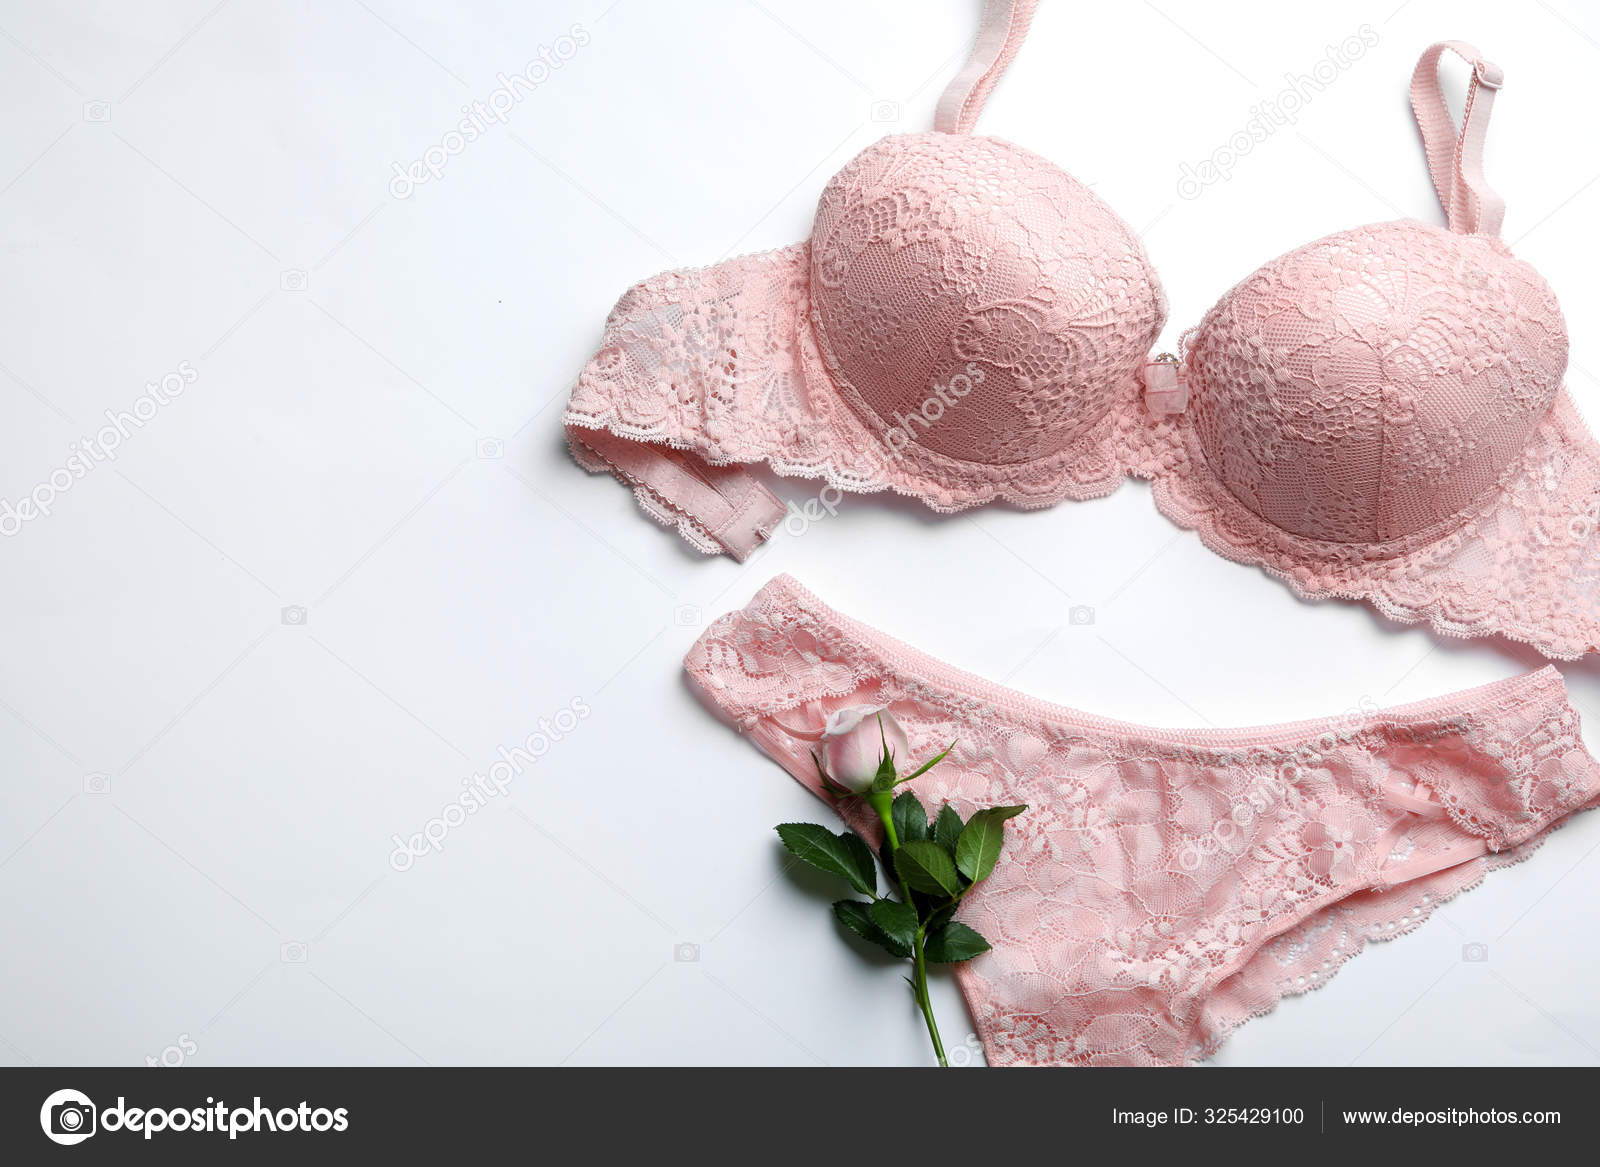 Elegant Plus Size Women`s Bras and Fluffy Cotton Flowers on Light